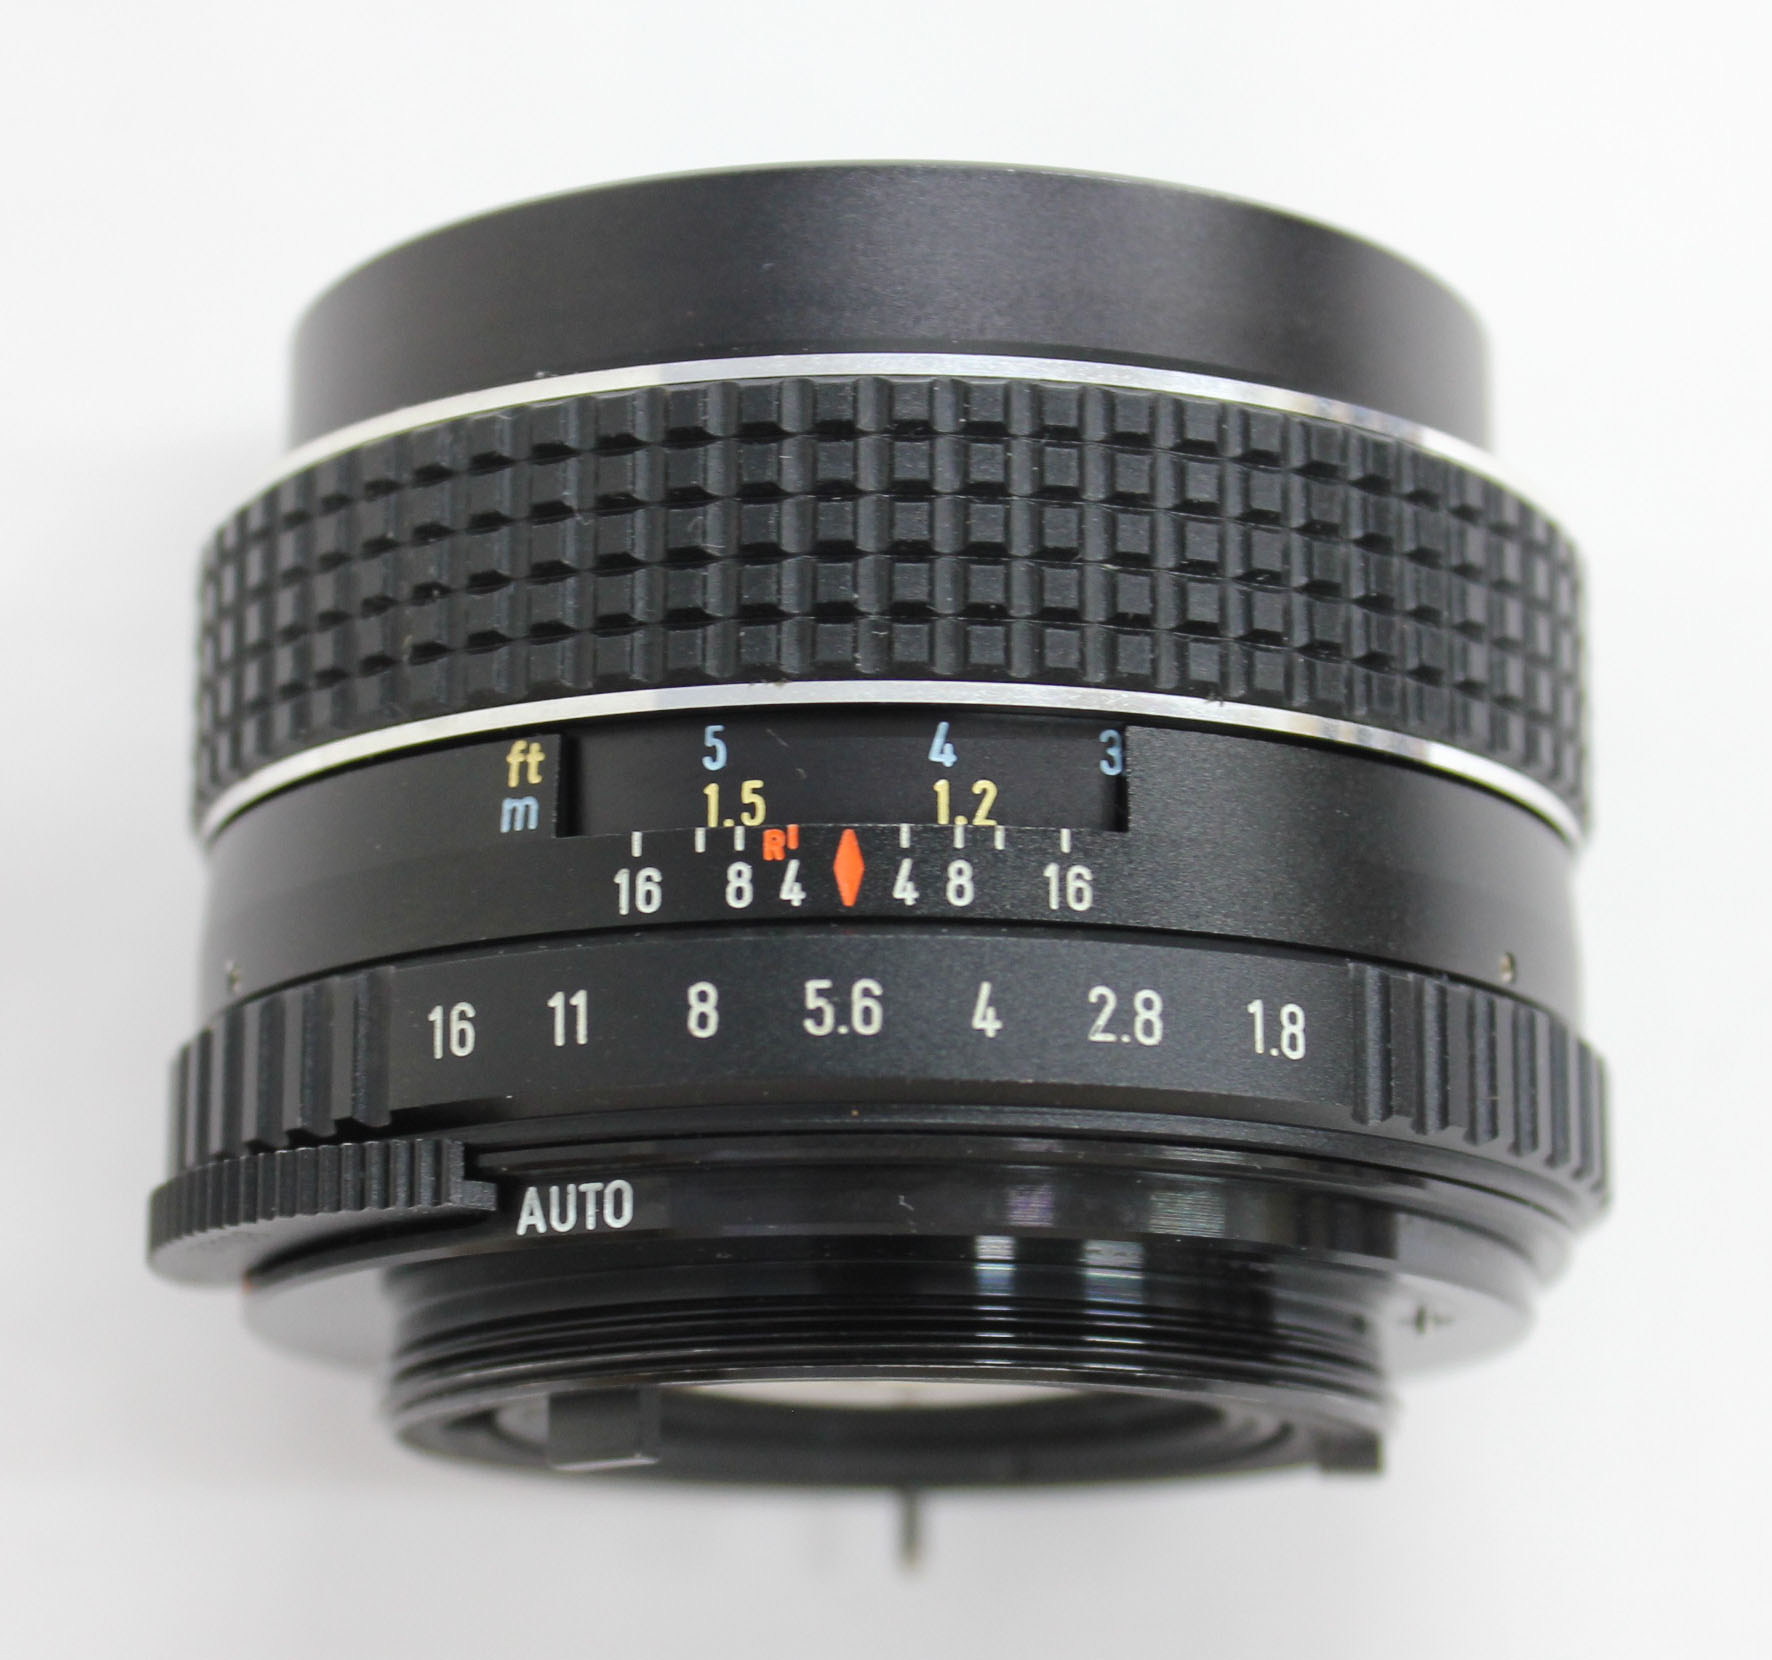 Asahi Pentax Spotmatic F SPF 35mm SLR Camera w/ SMC Takumar 55mm F/1.8 Lens from Japan Photo 15